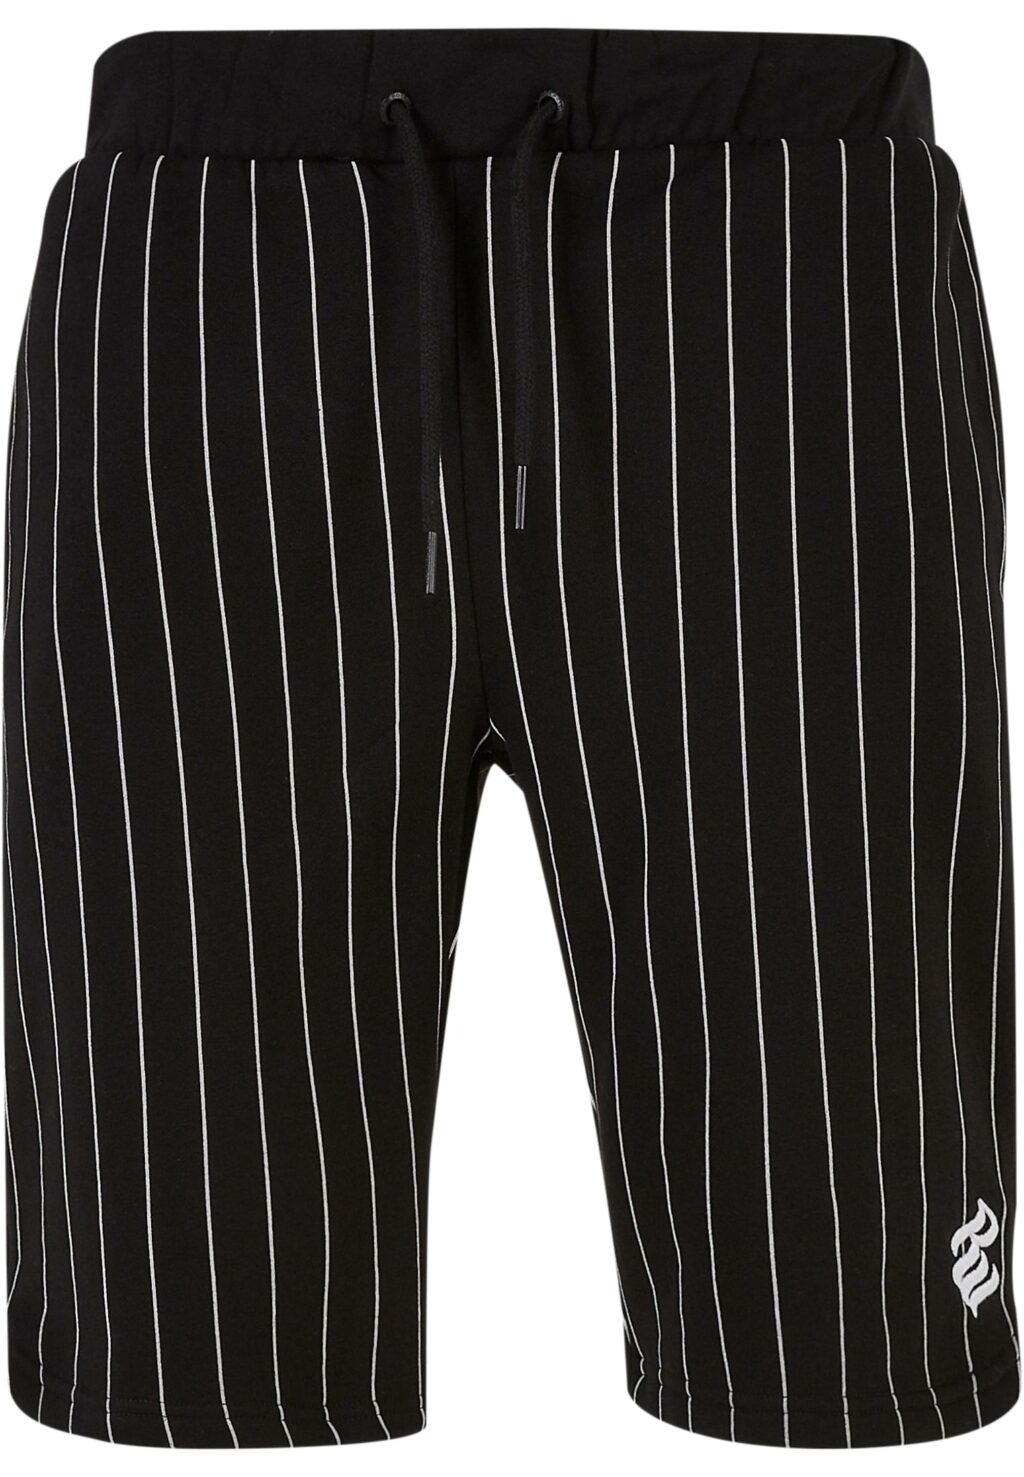 Rocawear Coles Shorts black RWSH013